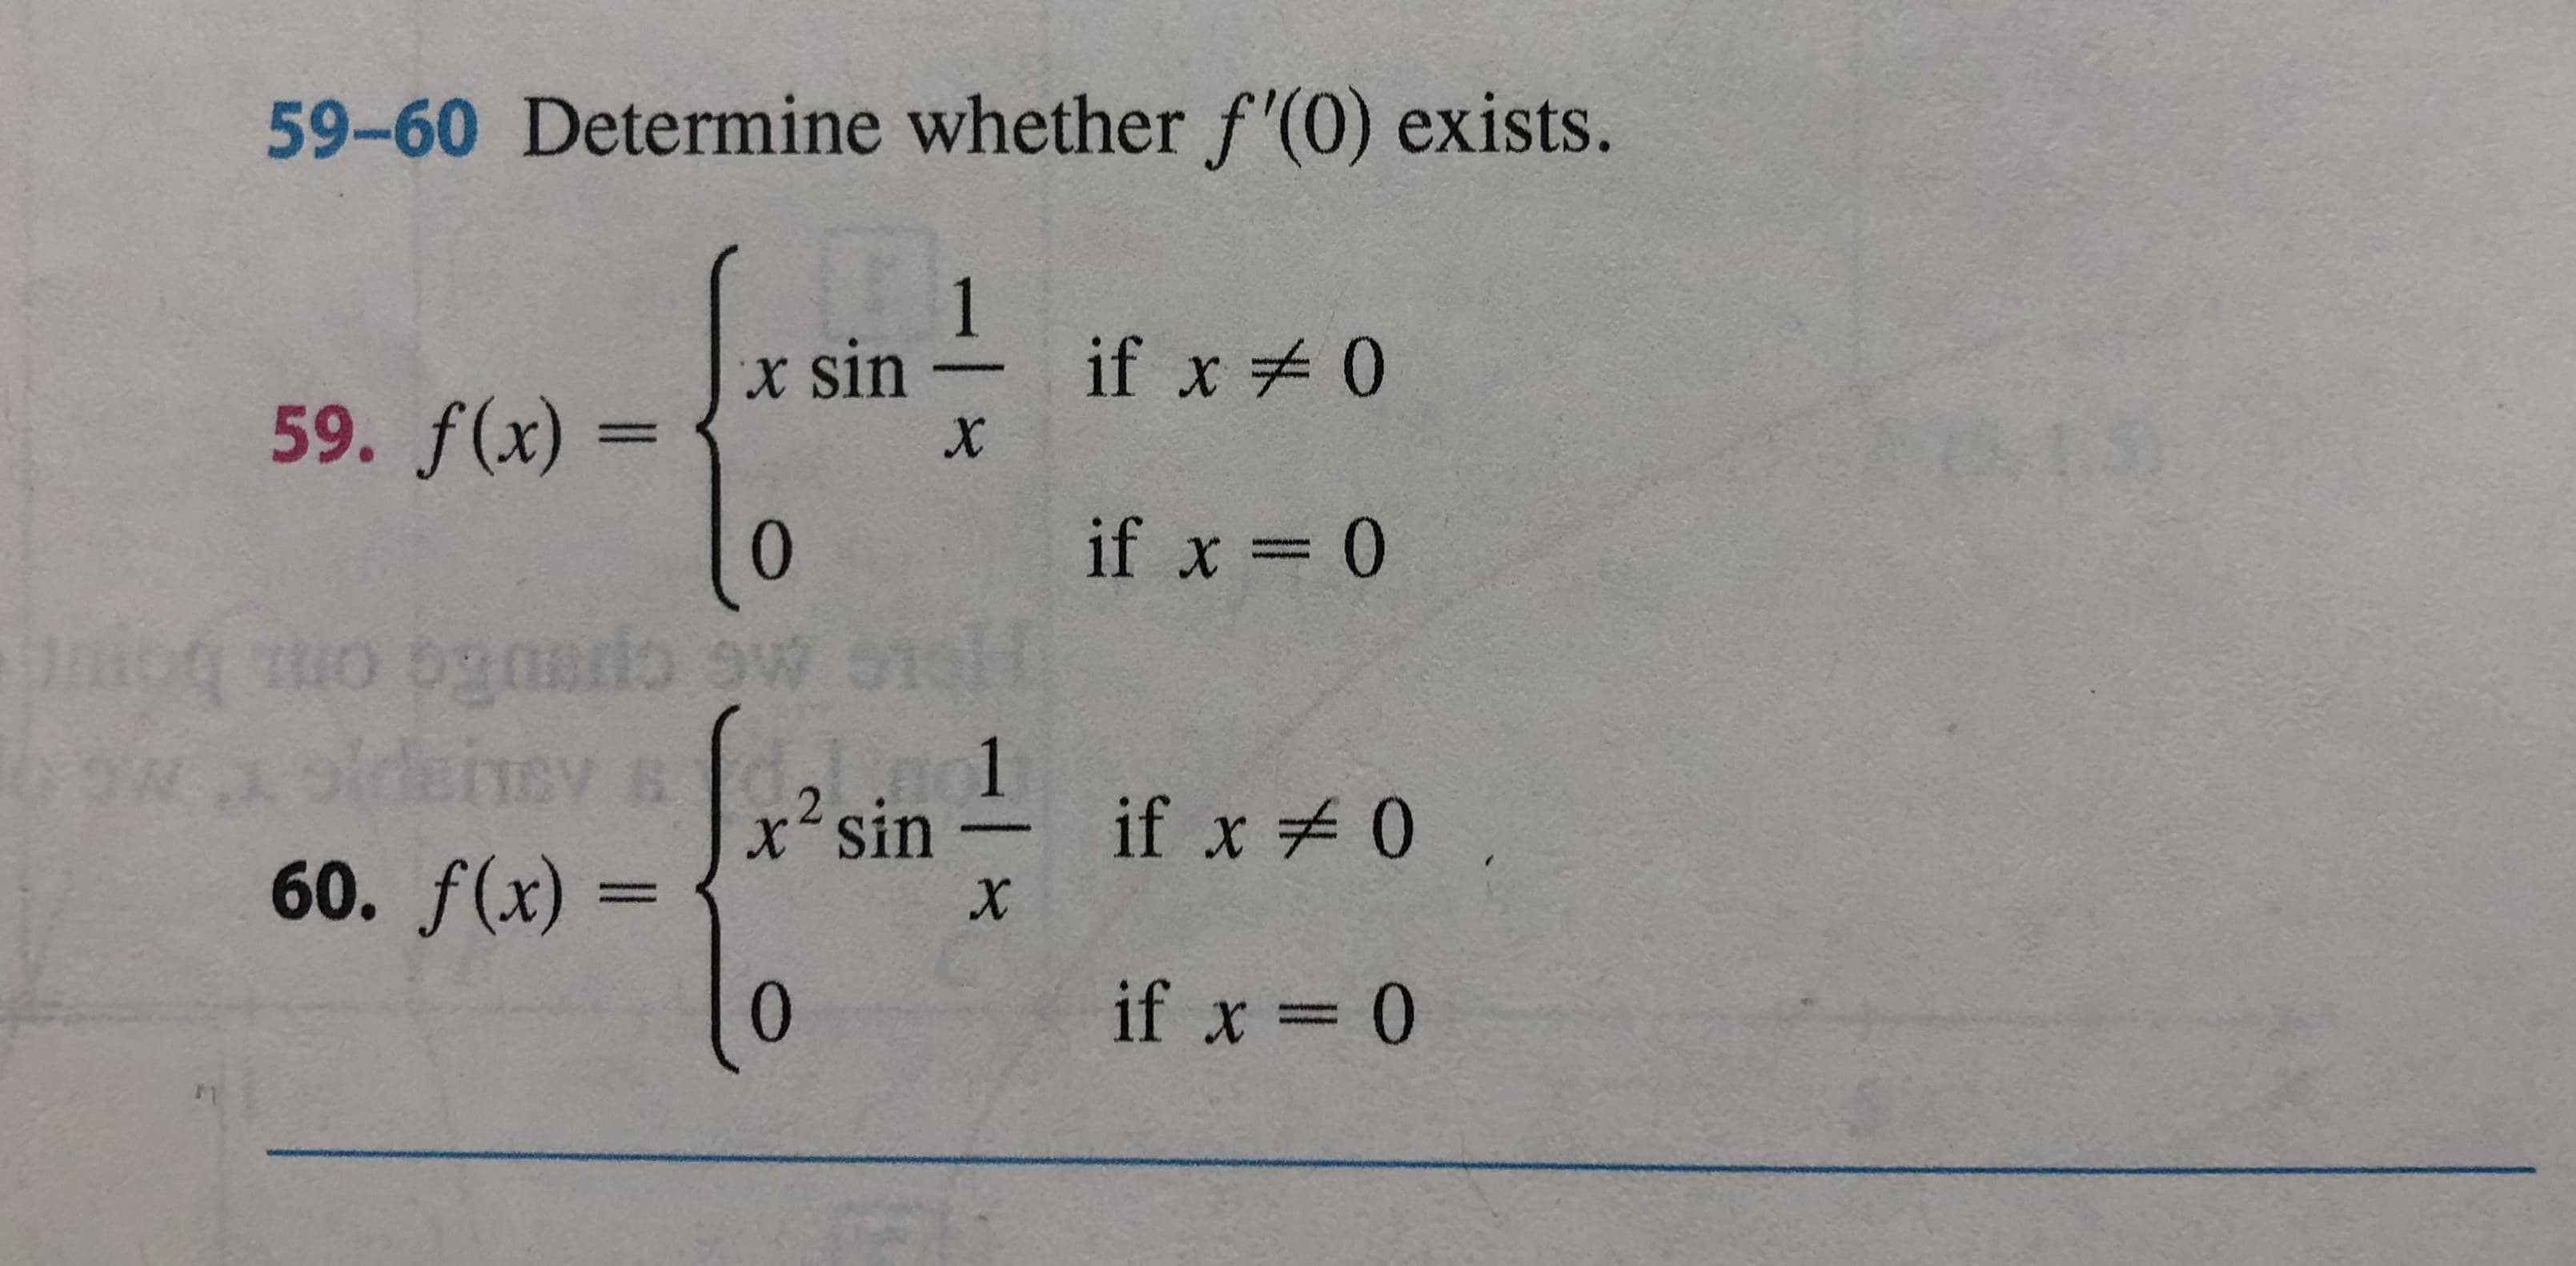 59-60 Determine whether f'(0) exists.
if x 0
sin
59. f(x)=
х
if x 0
o pgno 9W 6161
idess
60. f(x)=
xsin
if x 0
х
if x 0
